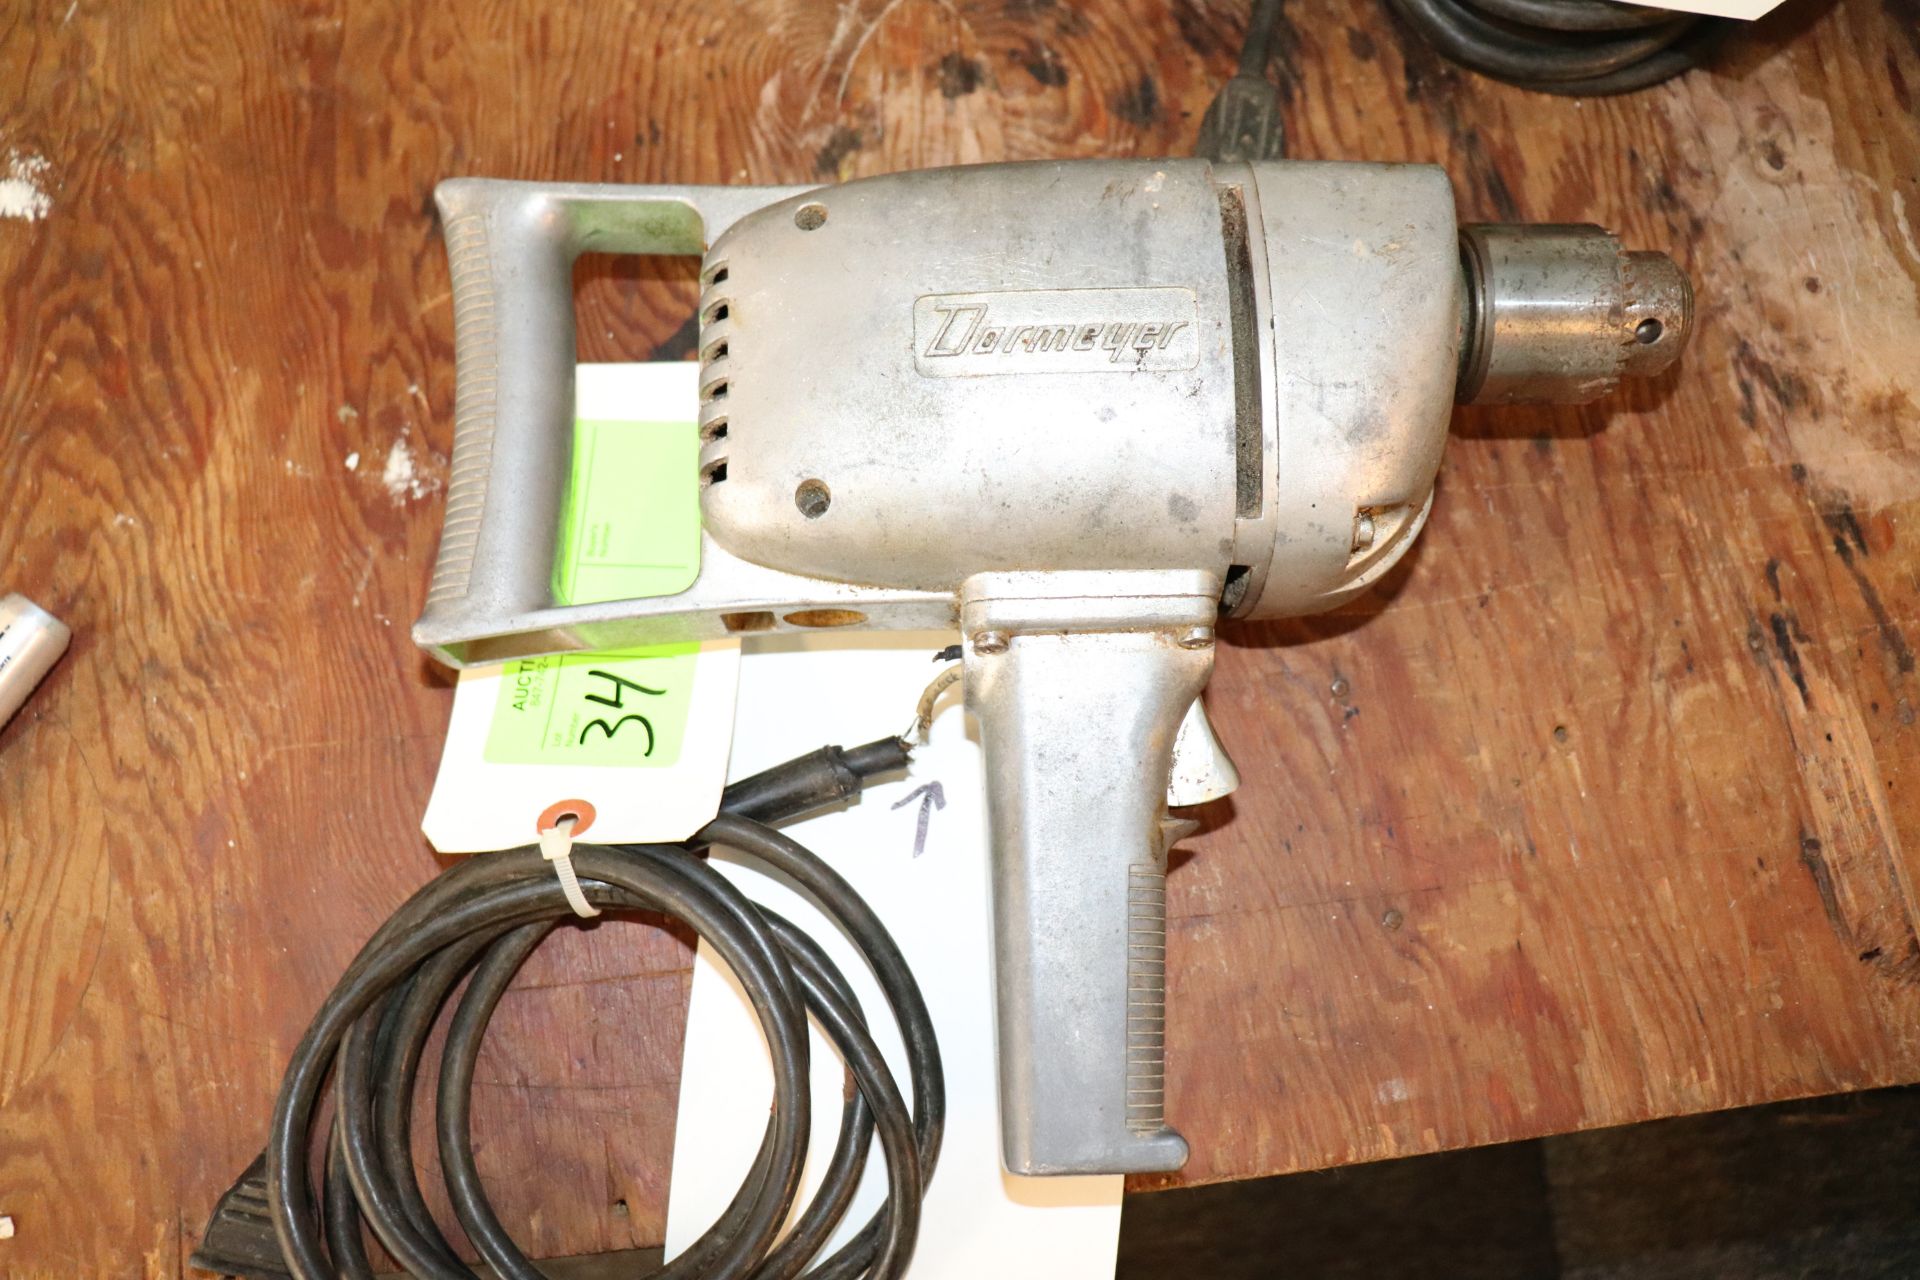 Dorneyer heavy duty electric drill